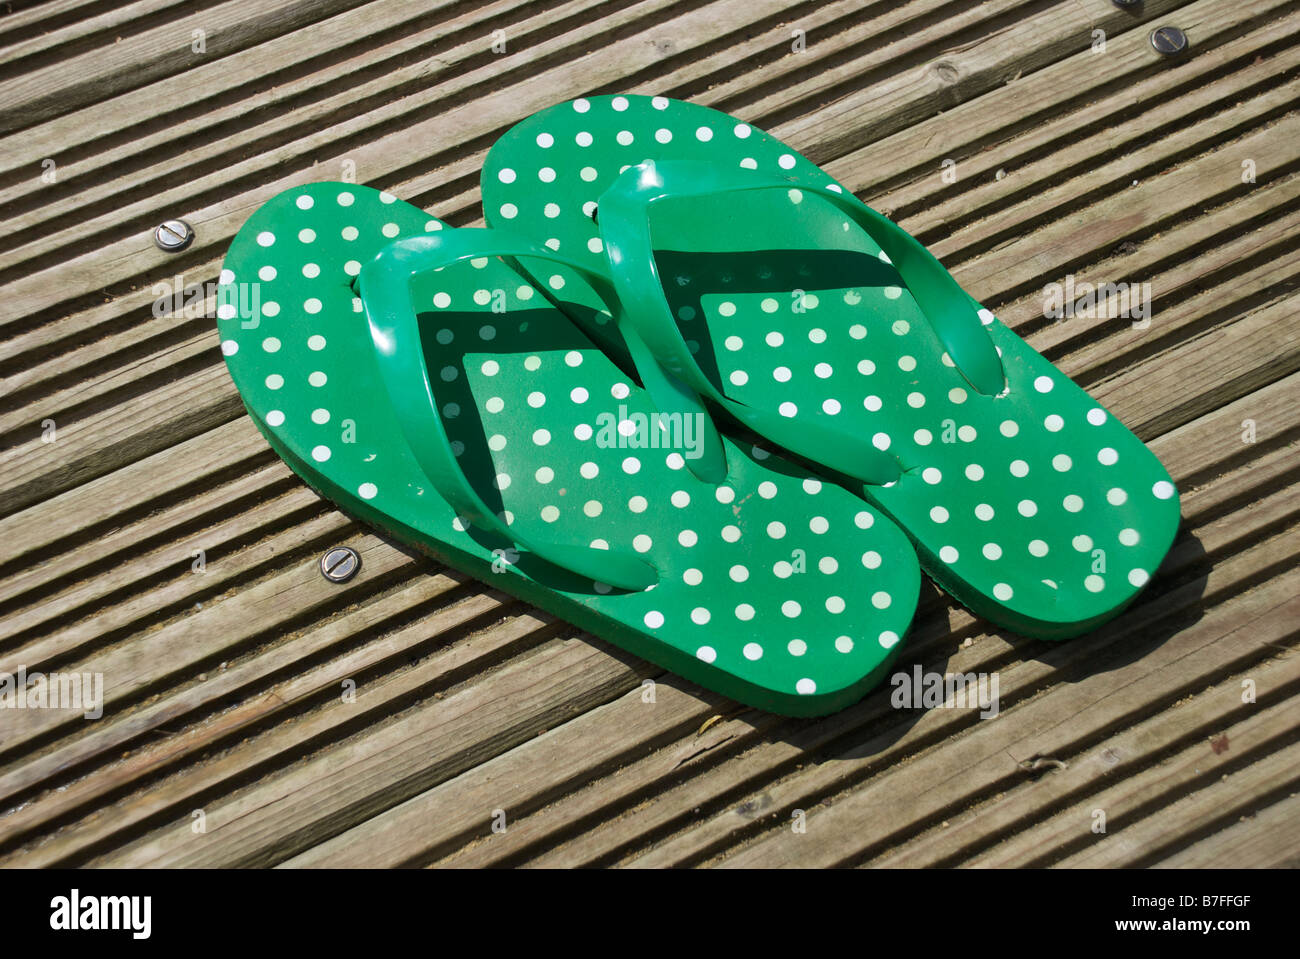 grün weiss Poka Dot Flip-Flops Flecken decking Deck Sommer Holz Sonne Gummi-Füße Zehen Stockfoto